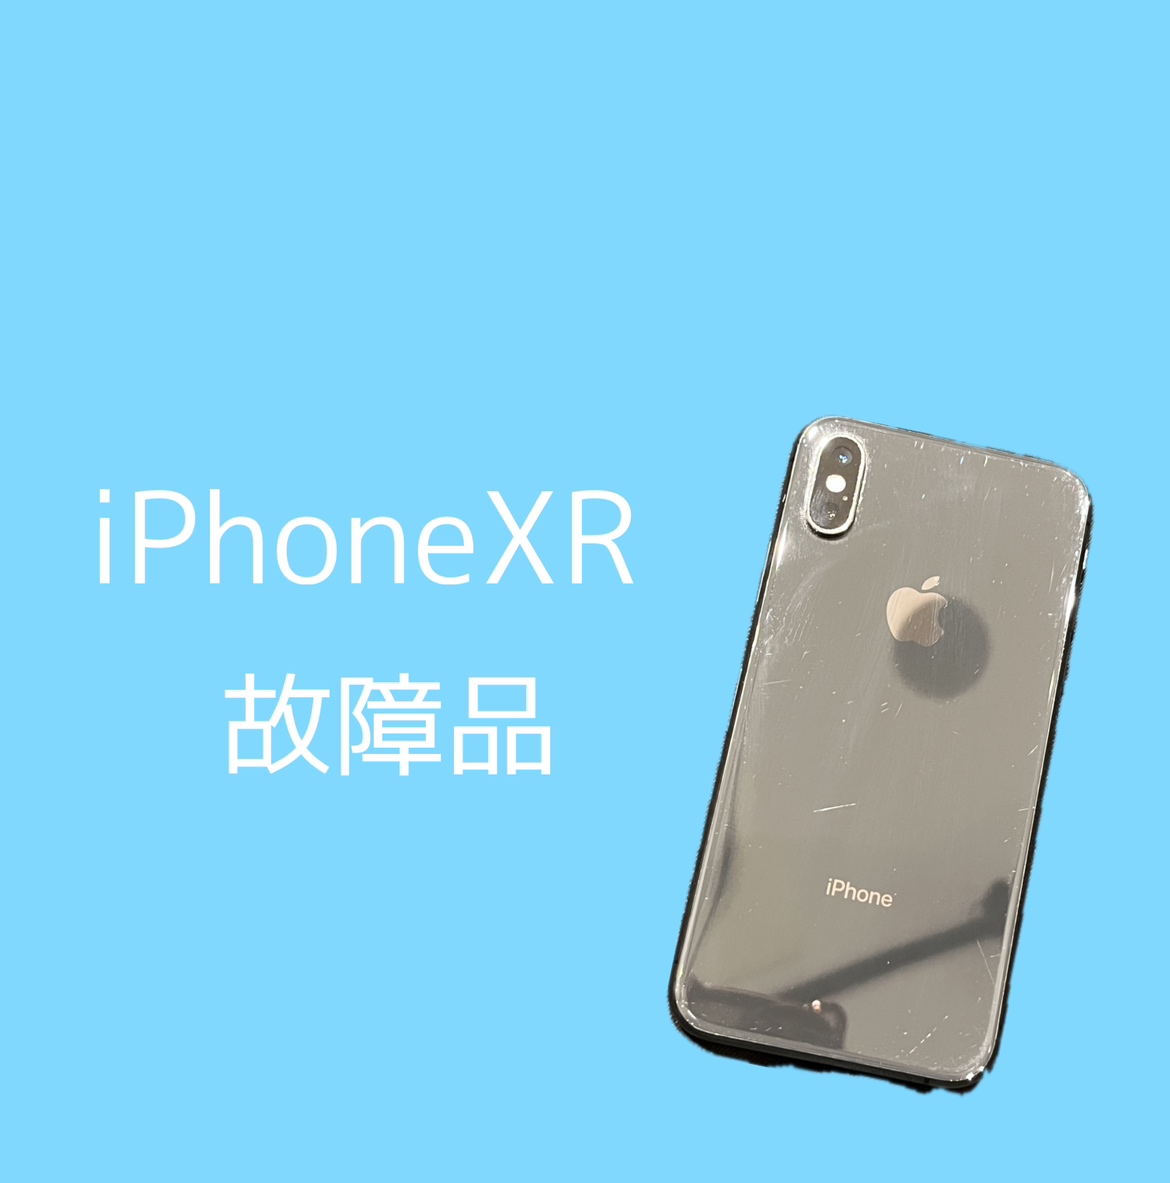 iPhoneXR・容量不明・au・ネット制限〇【天神地下街店】